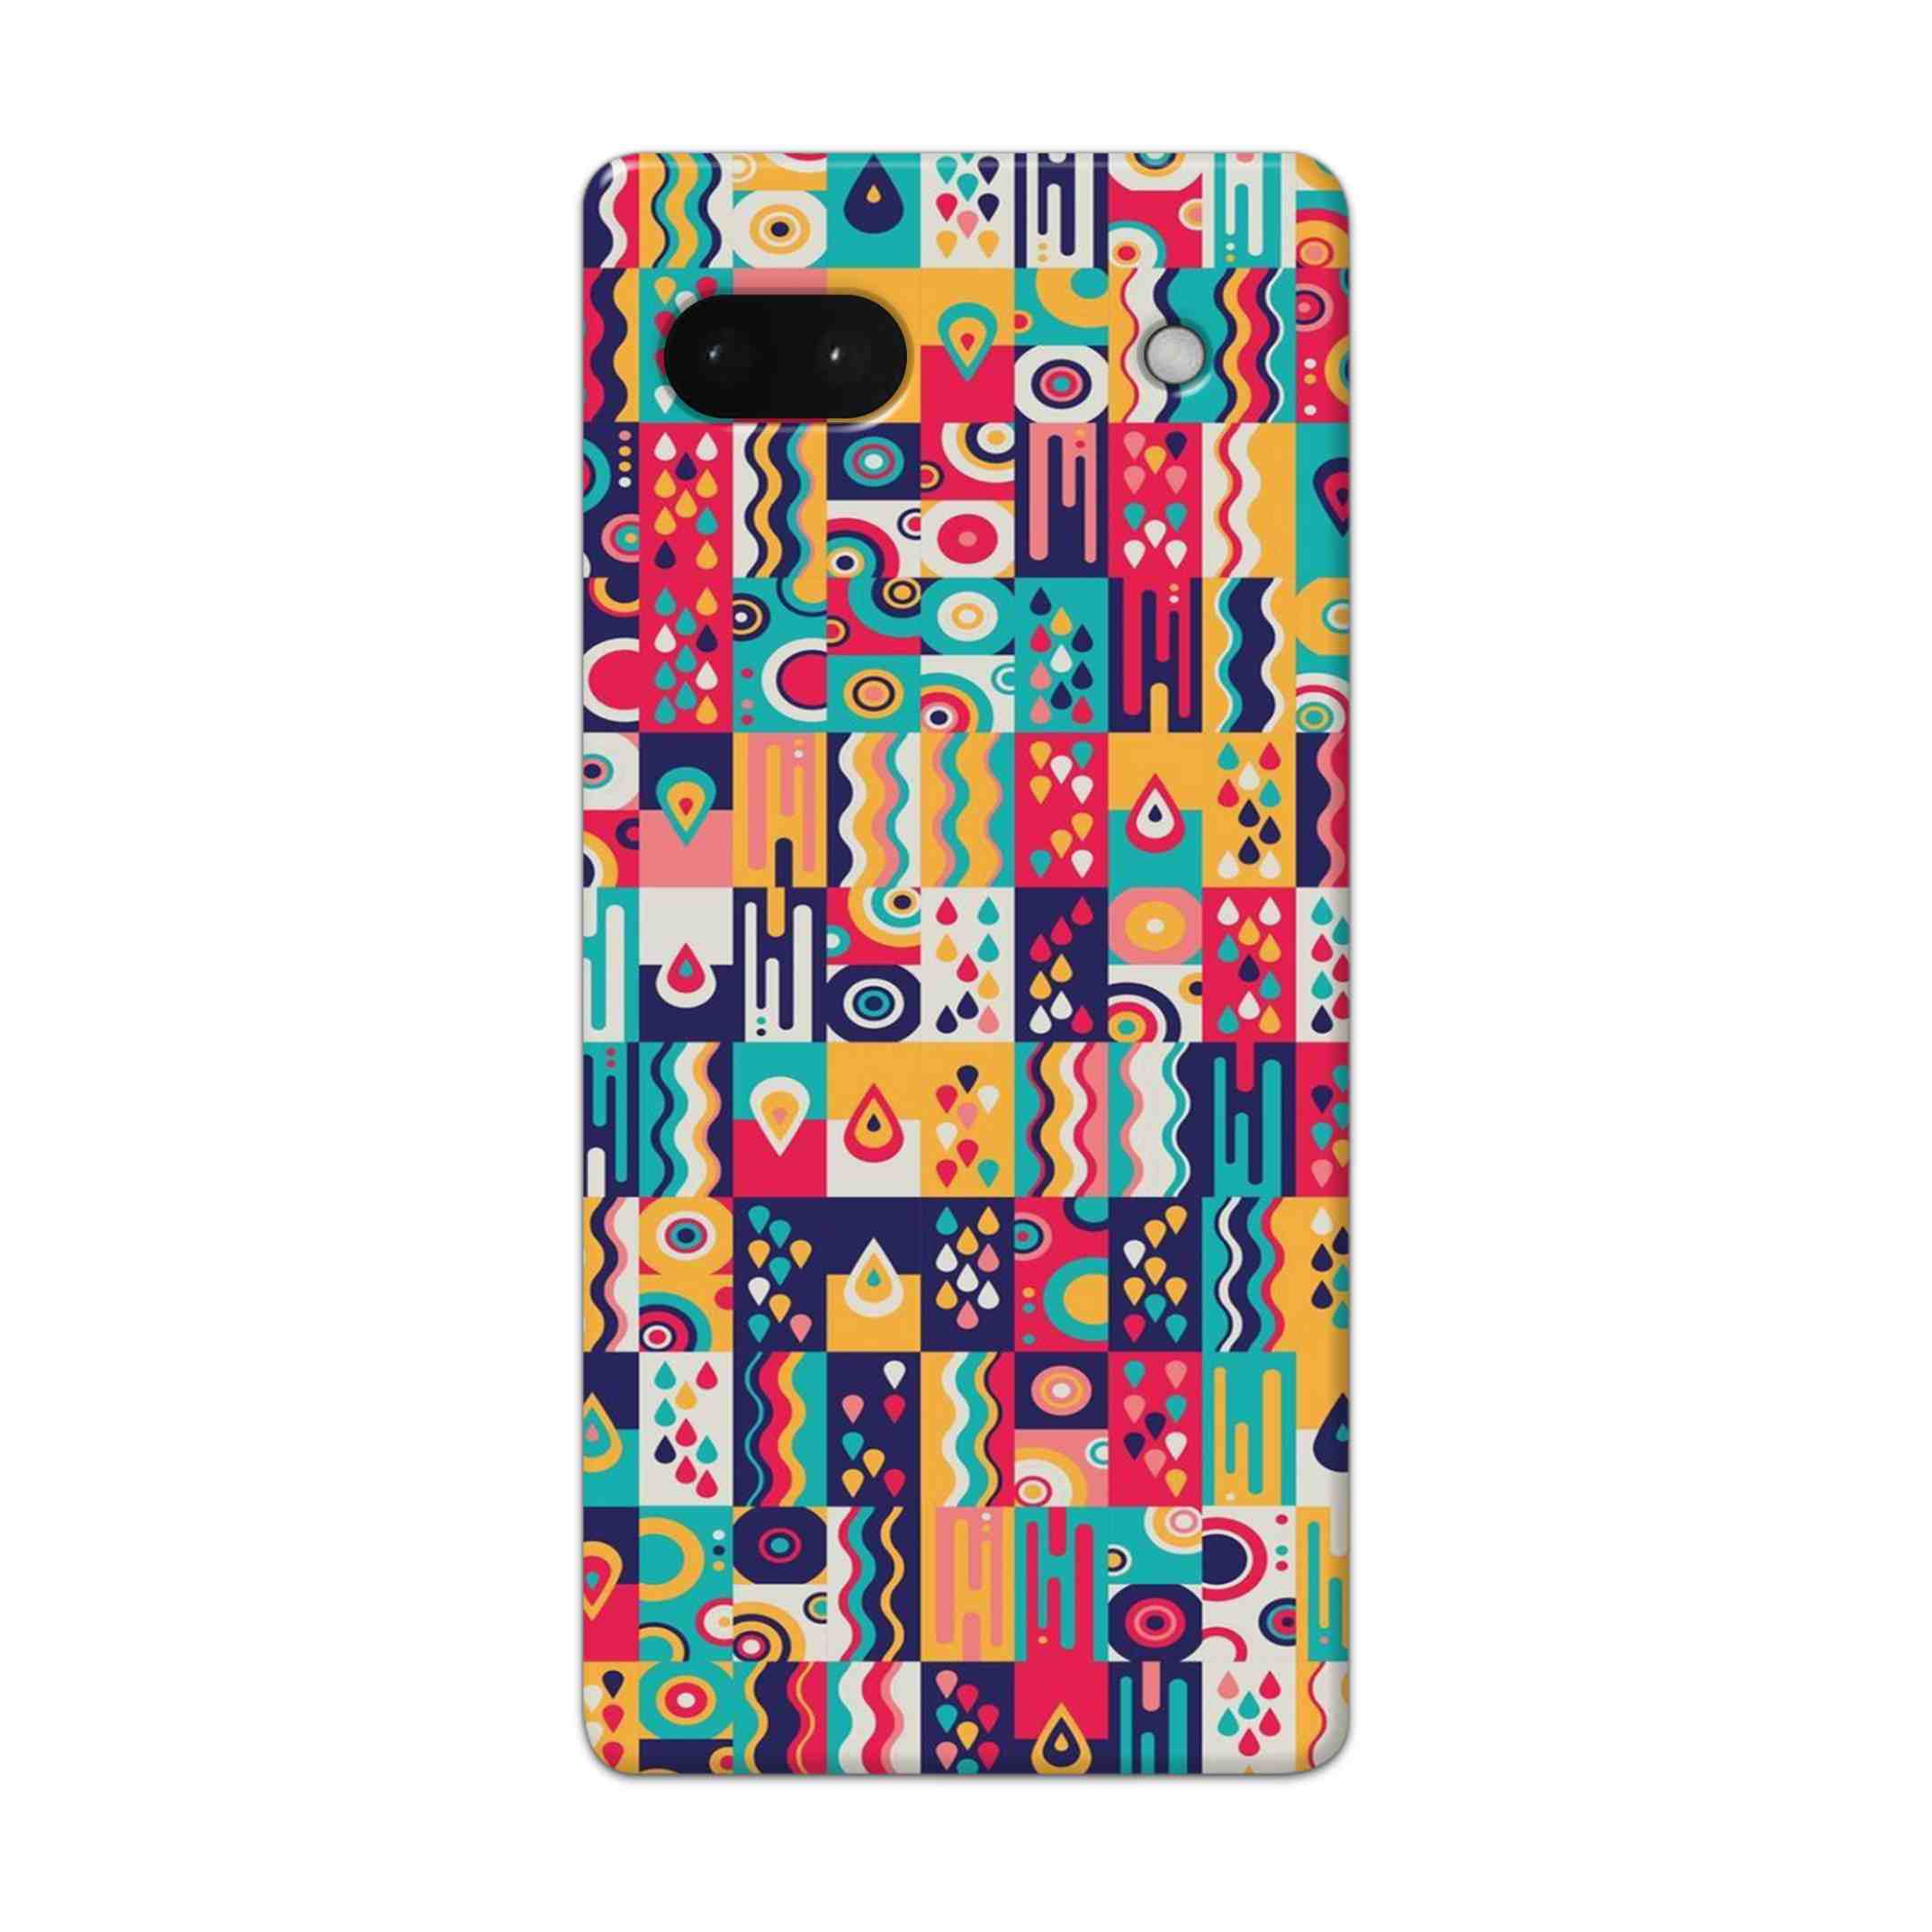 Buy Art Hard Back Mobile Phone Case Cover For Google Pixel 6a Online